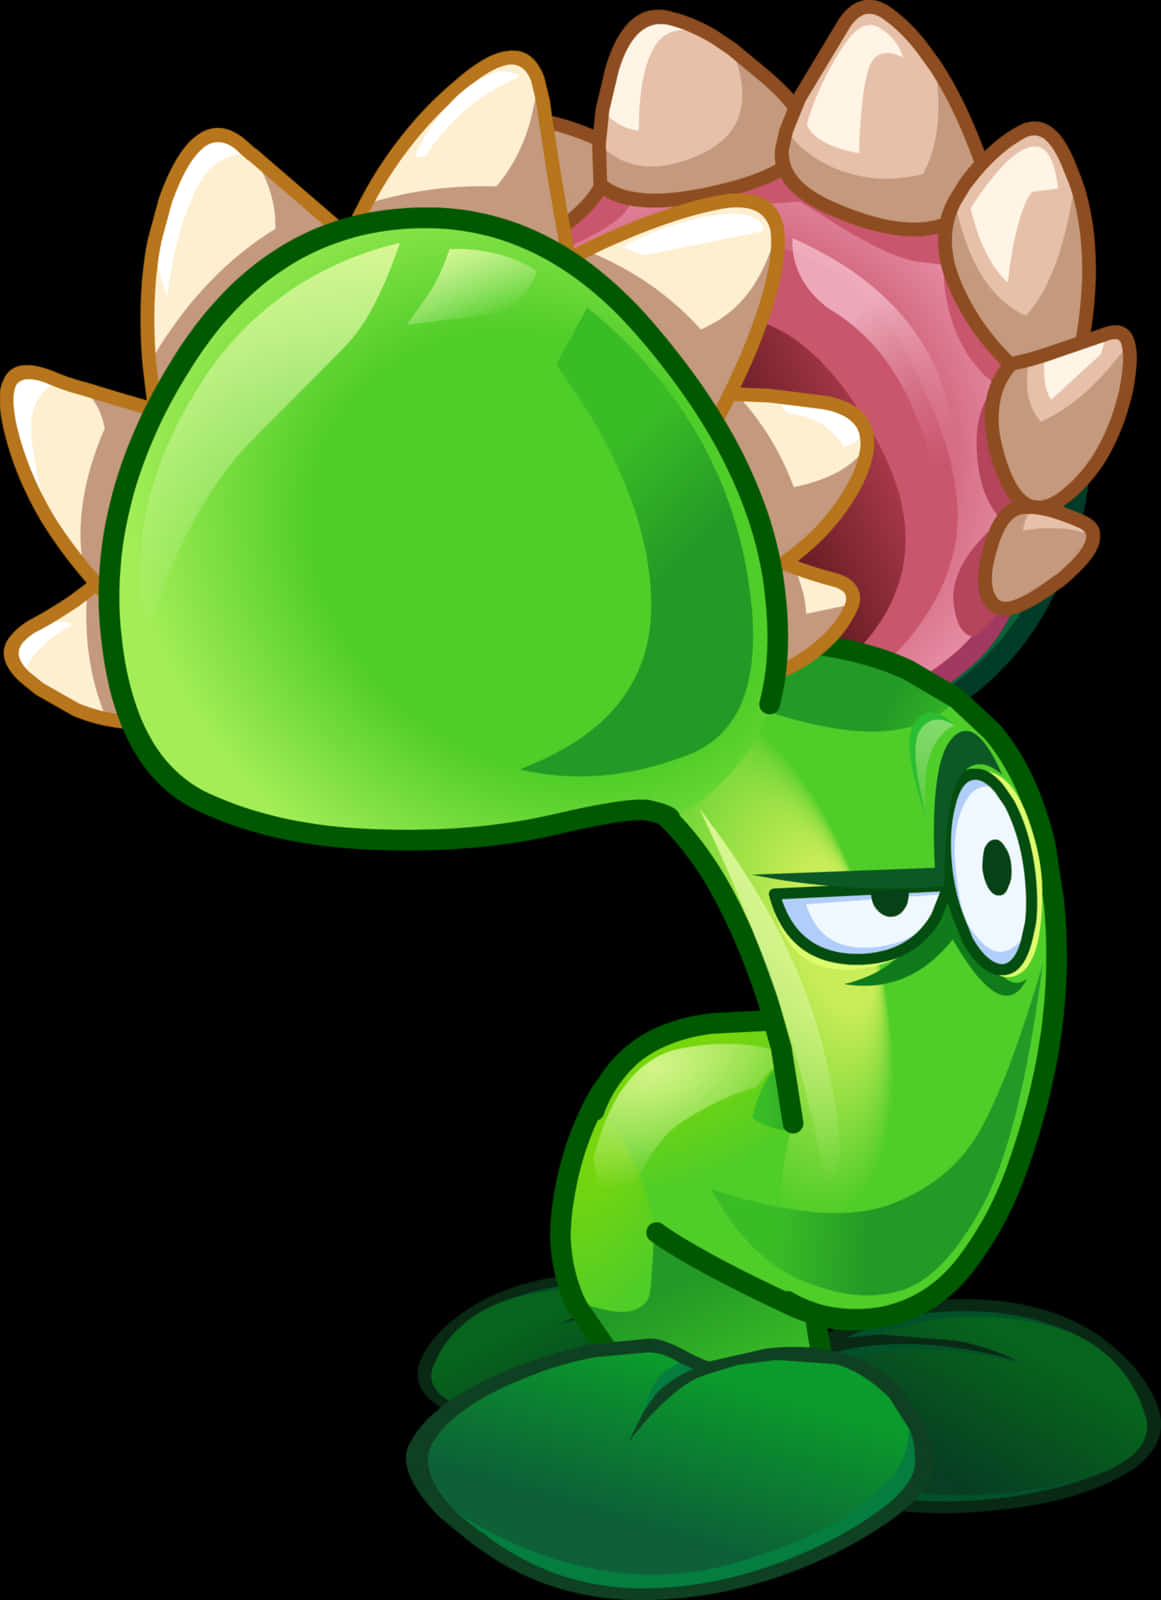 Green Shell Creature Cartoon PNG image